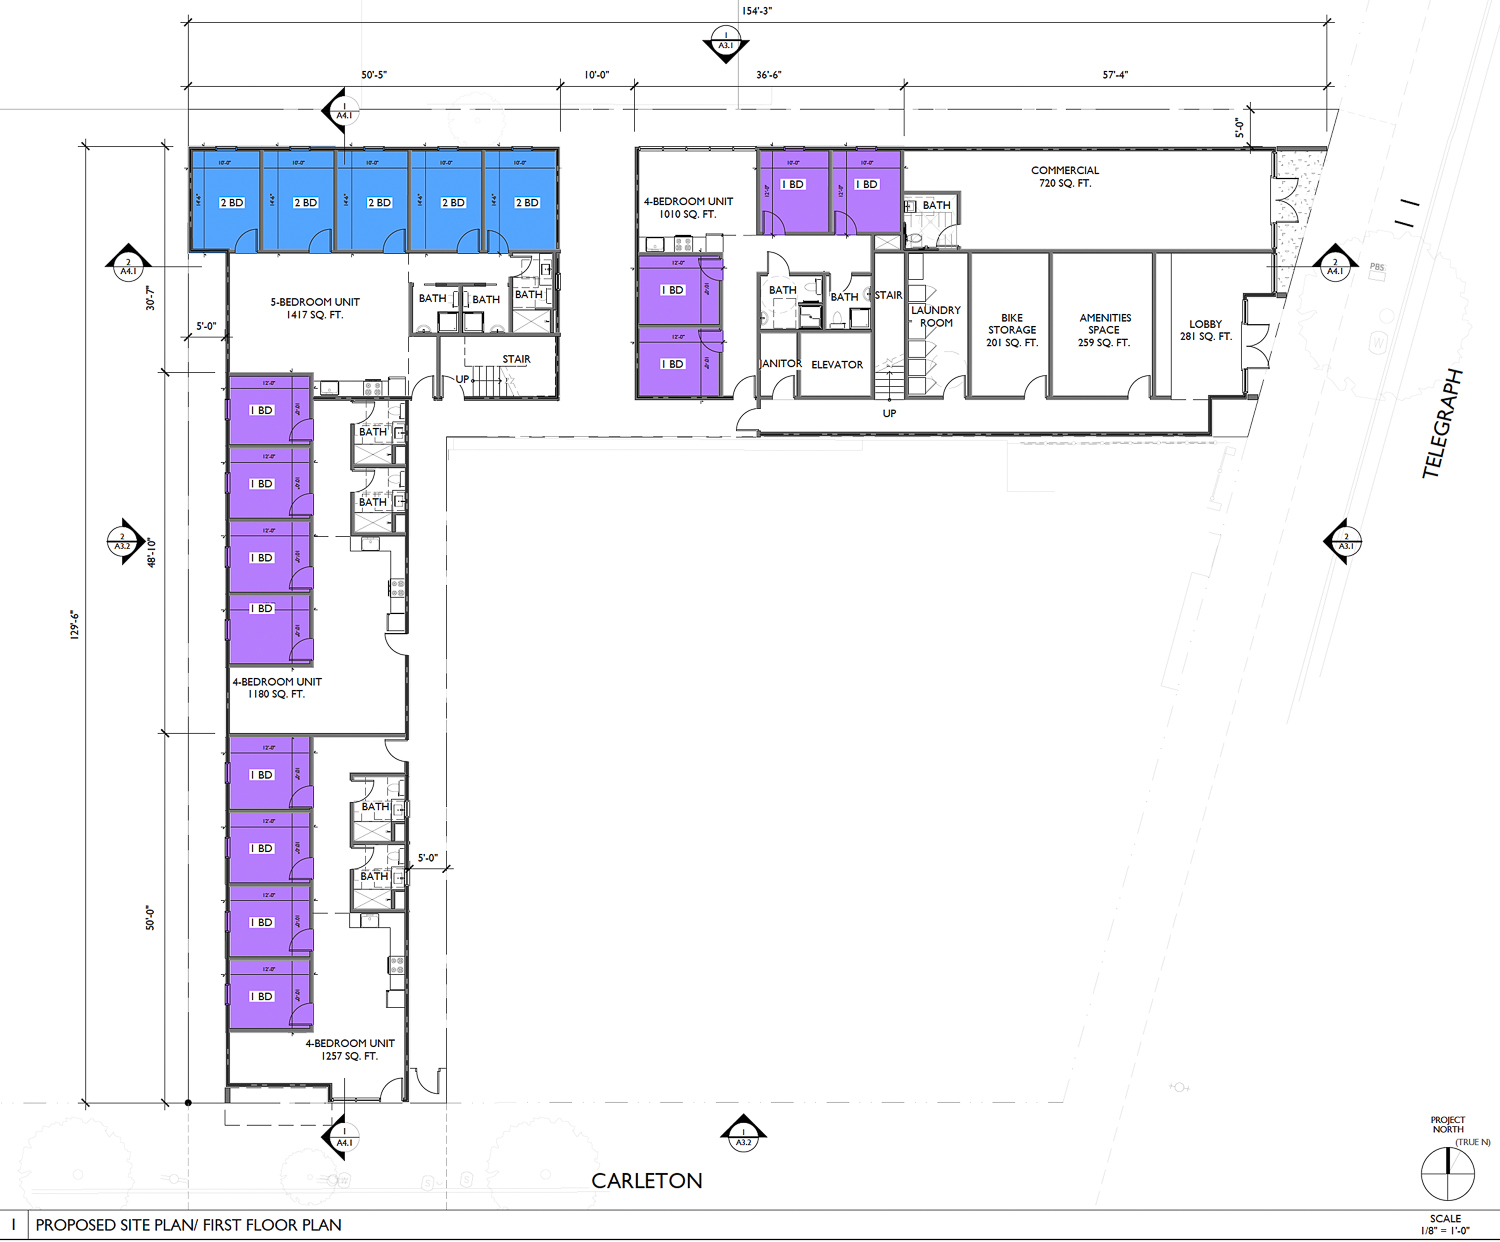 2614 Telegraph Avenue floor plan, illustration by Gunkel Architecture